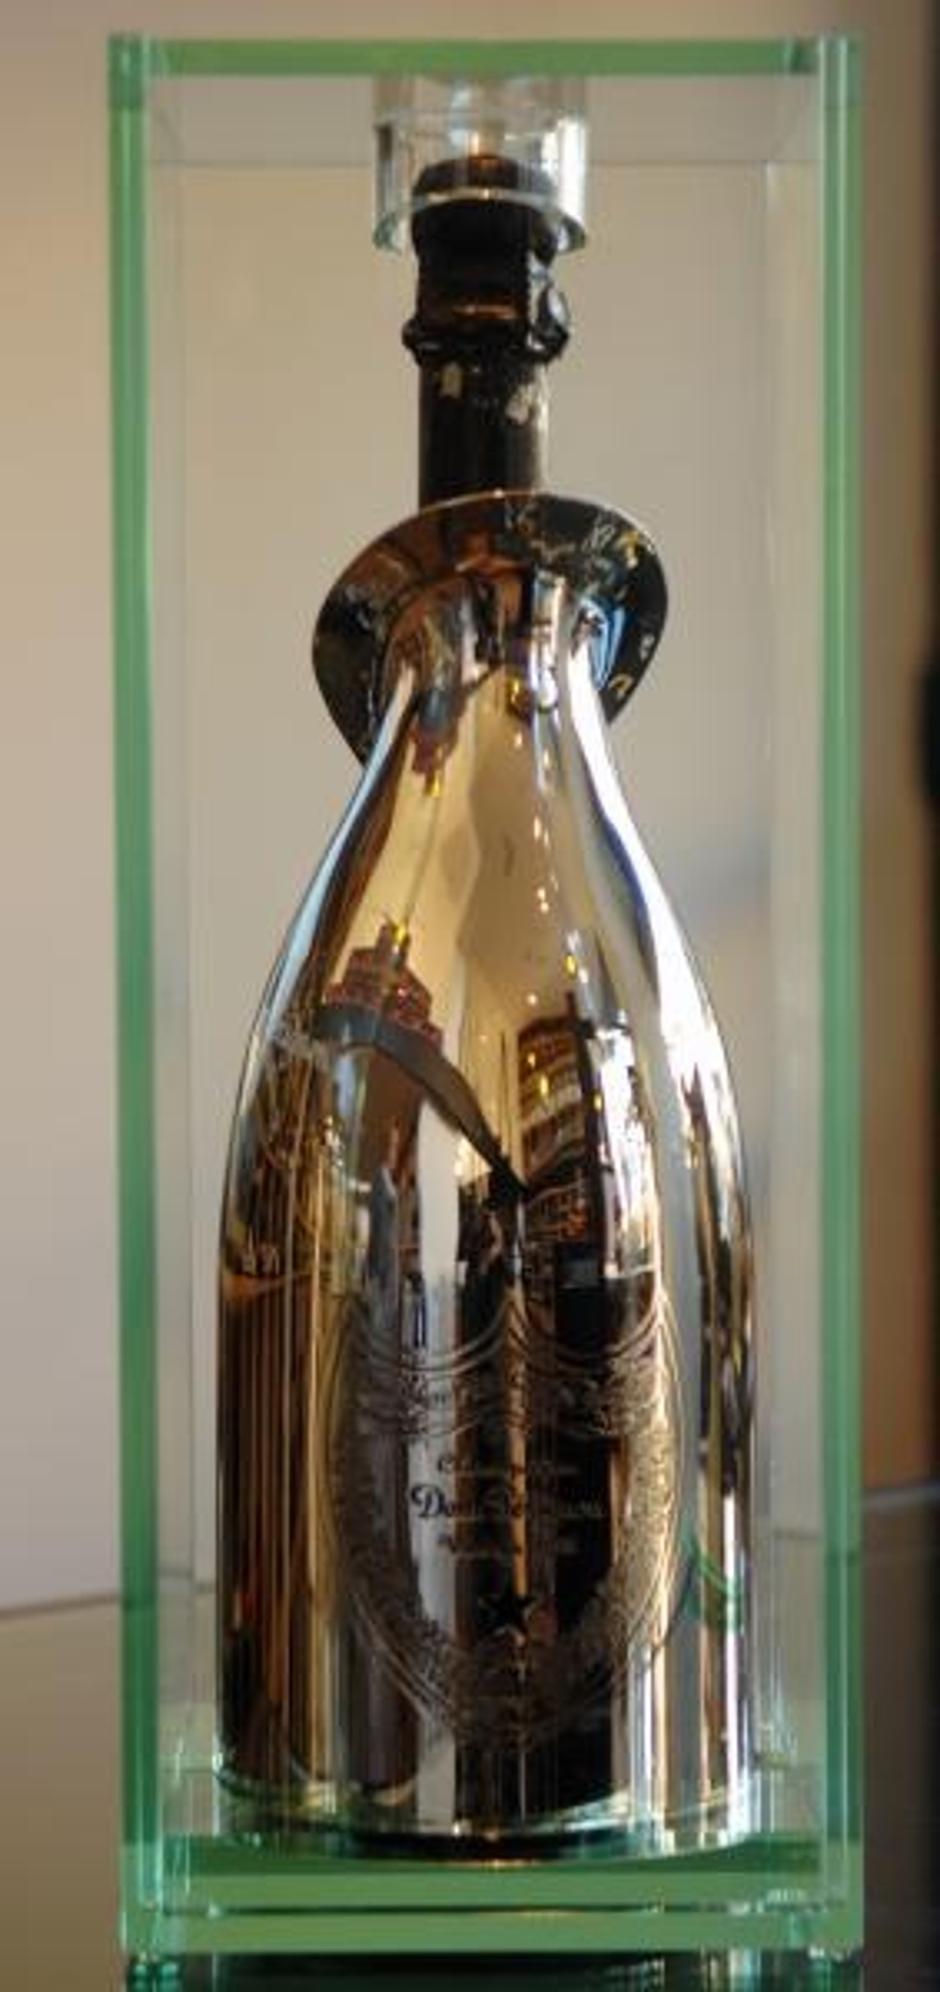 Šampanjac Dom Perignon White Gold 1998 u Mivi stoji 100 000 kuna! | Author: Davor Višnjić/PIXSELL